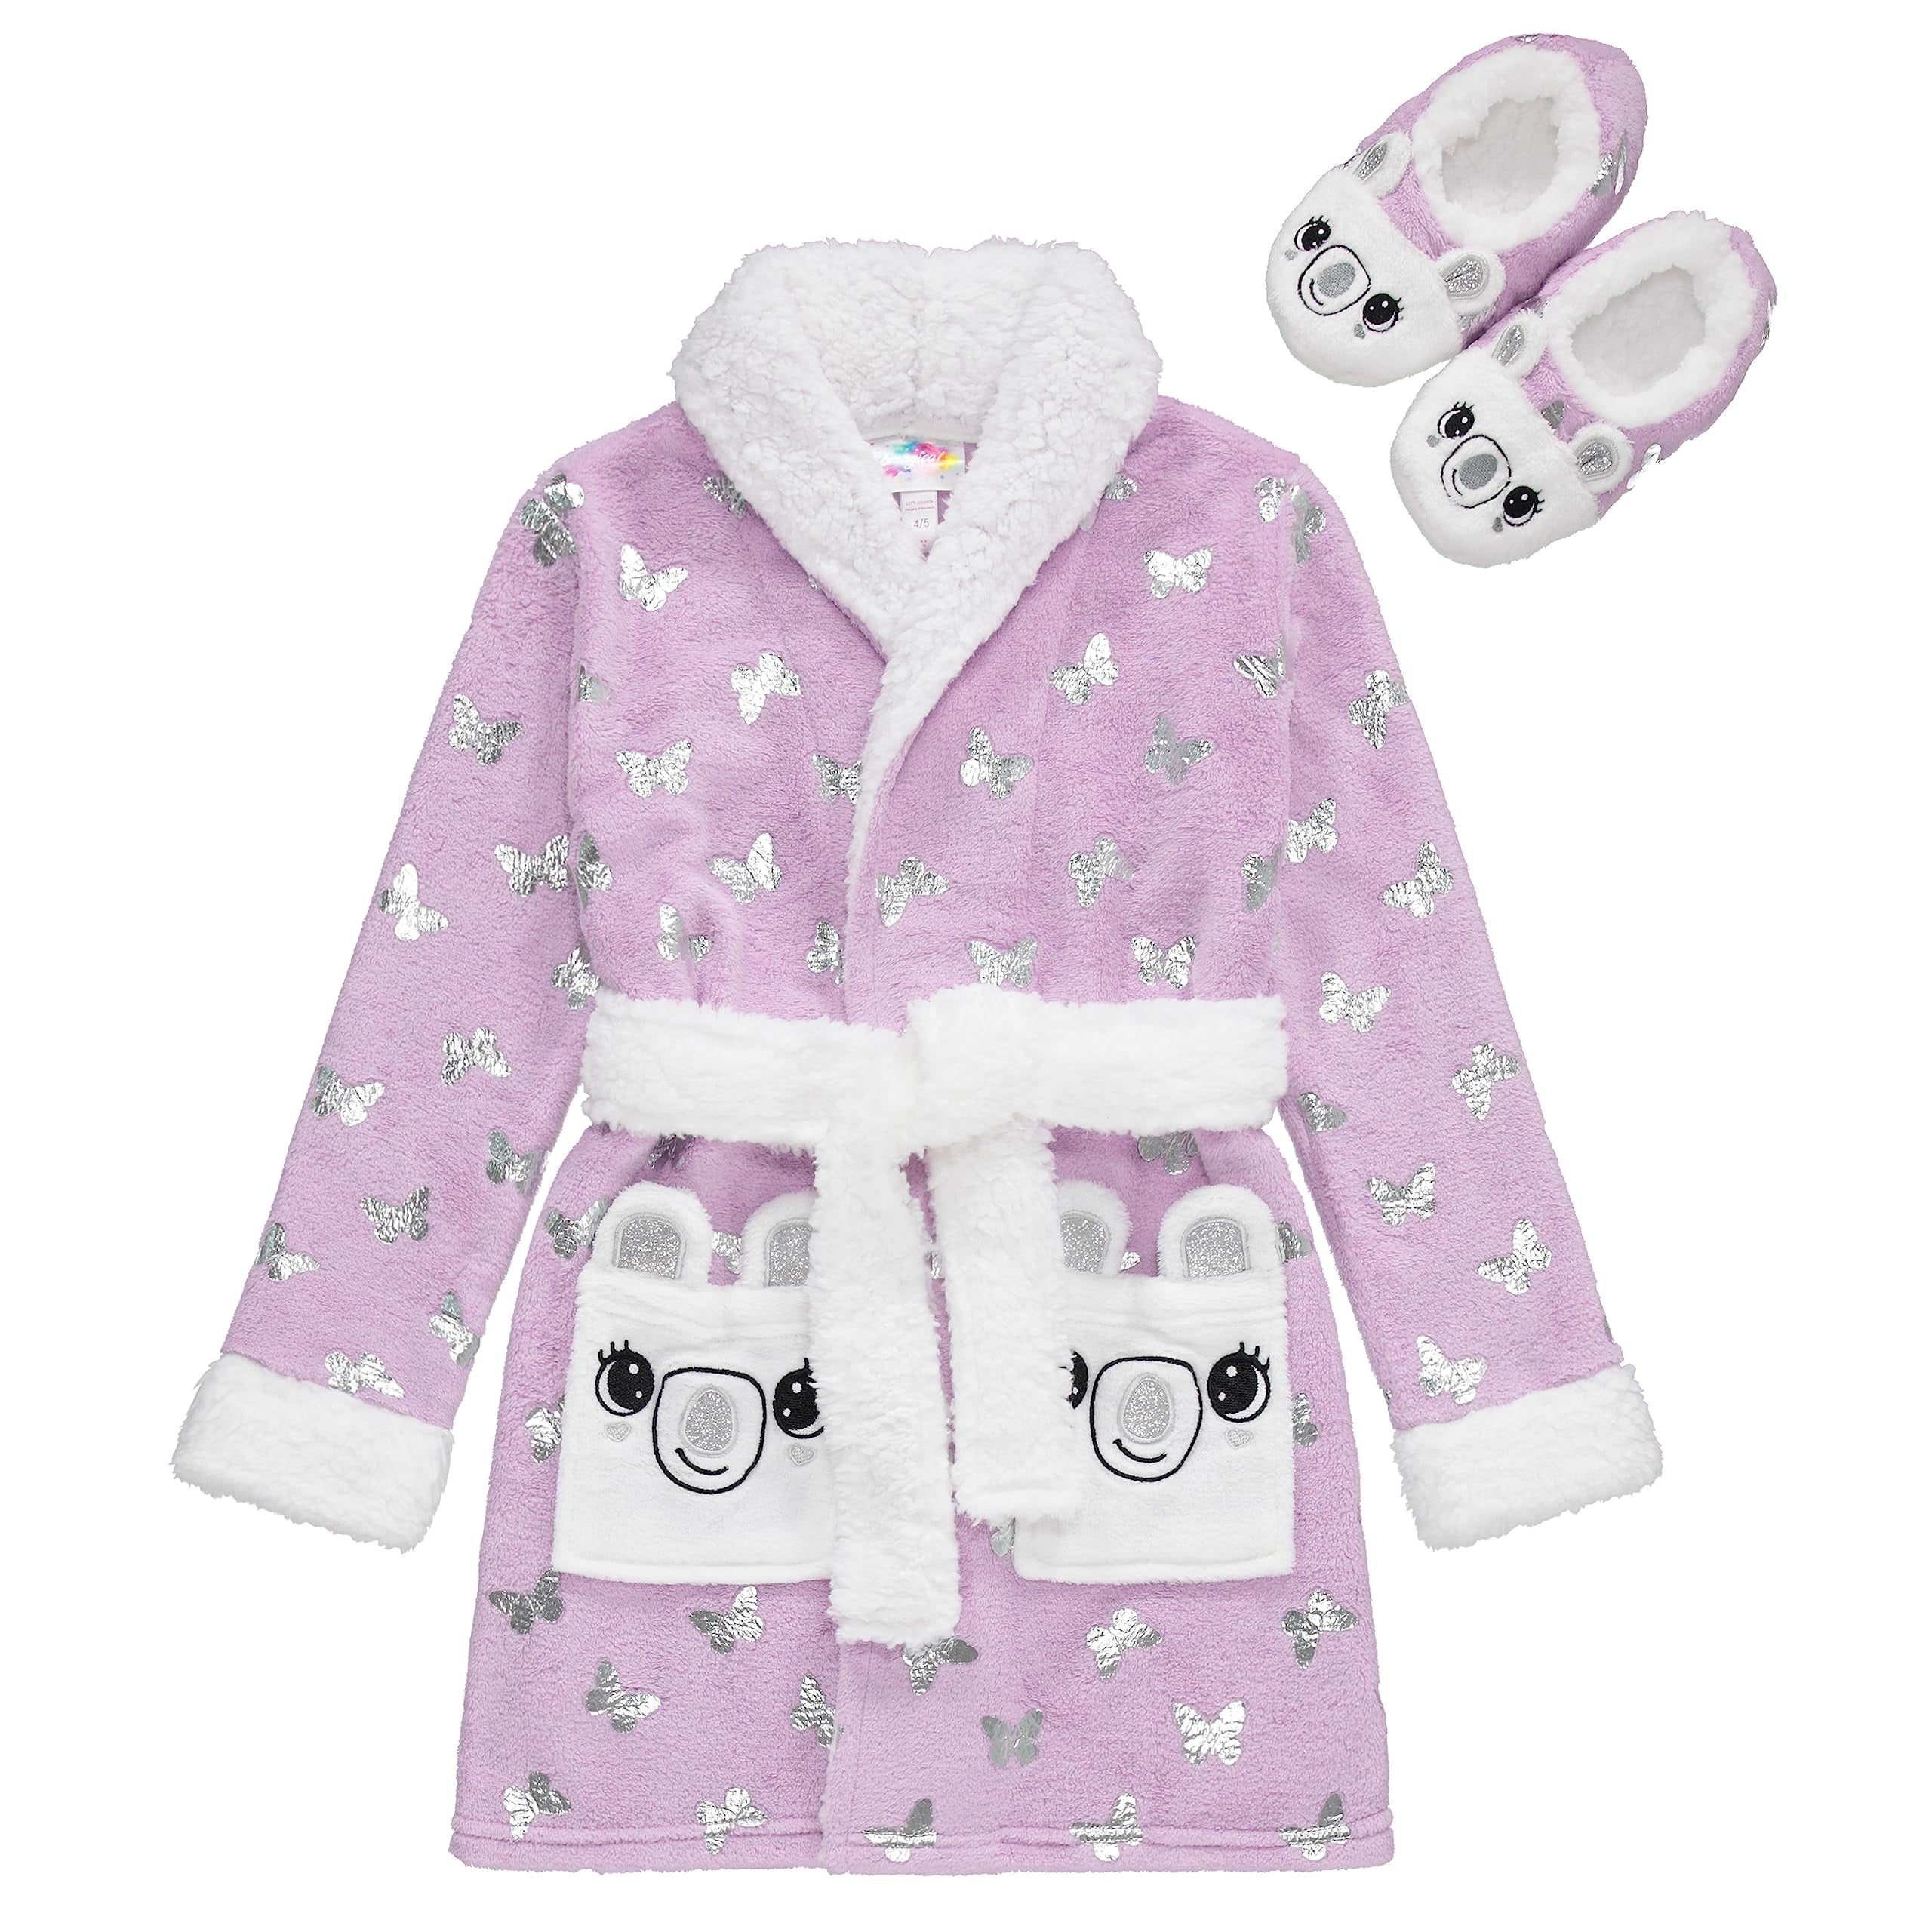 Disney Girls Lilo and Stitch Robe Size 4-10 Pajamas & Swimsuit Cover Up  Bathrobe